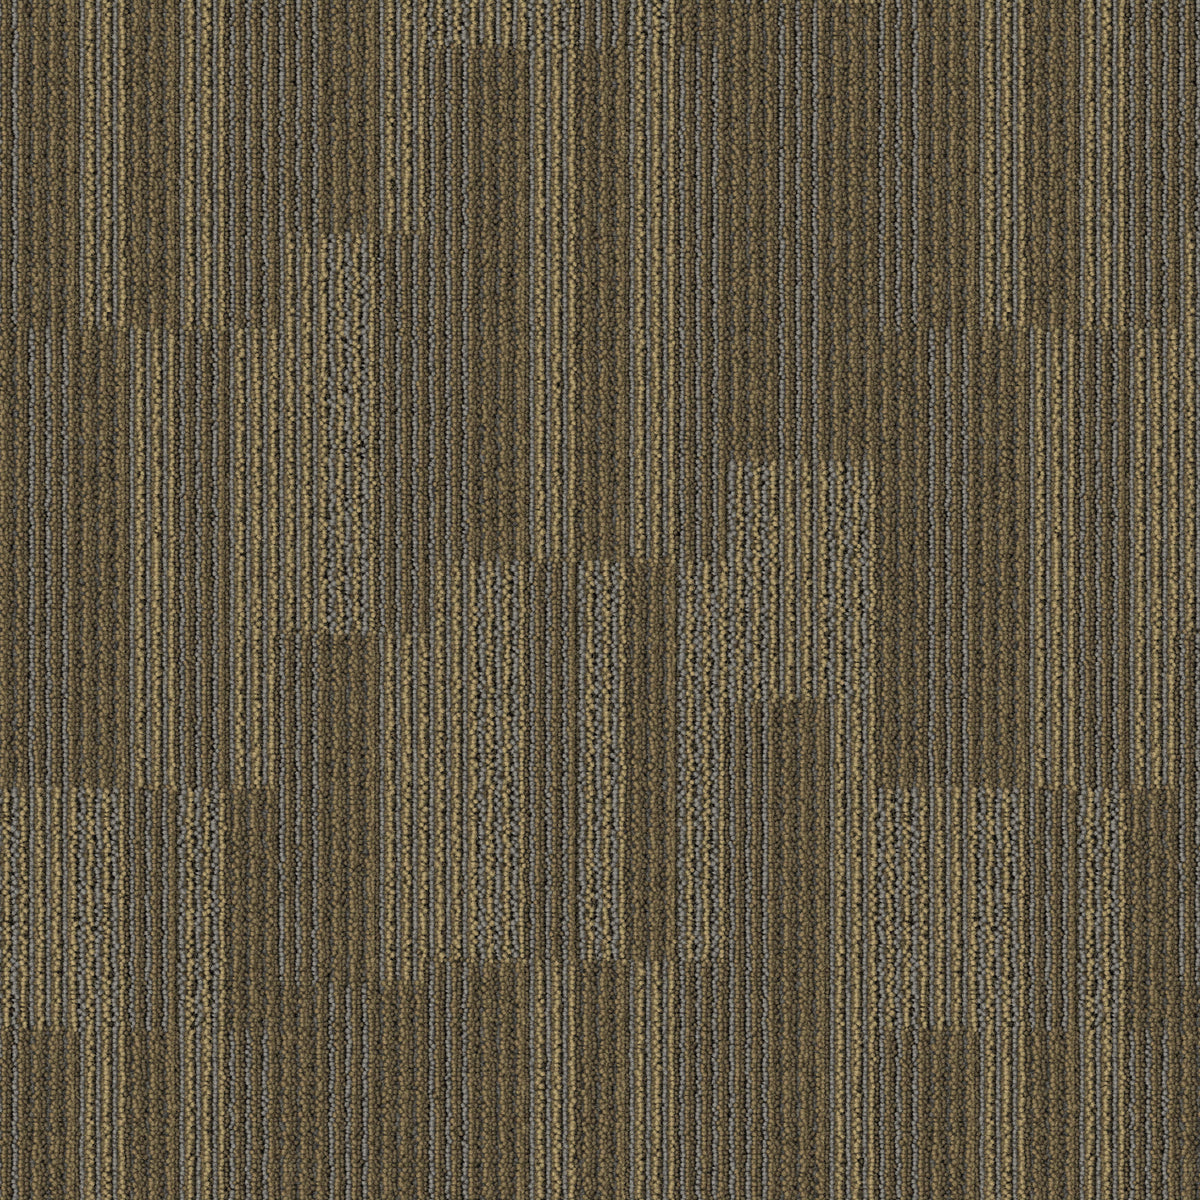 Mohawk Group - Bending Earth - Sector - Carpet Tile - Pumice